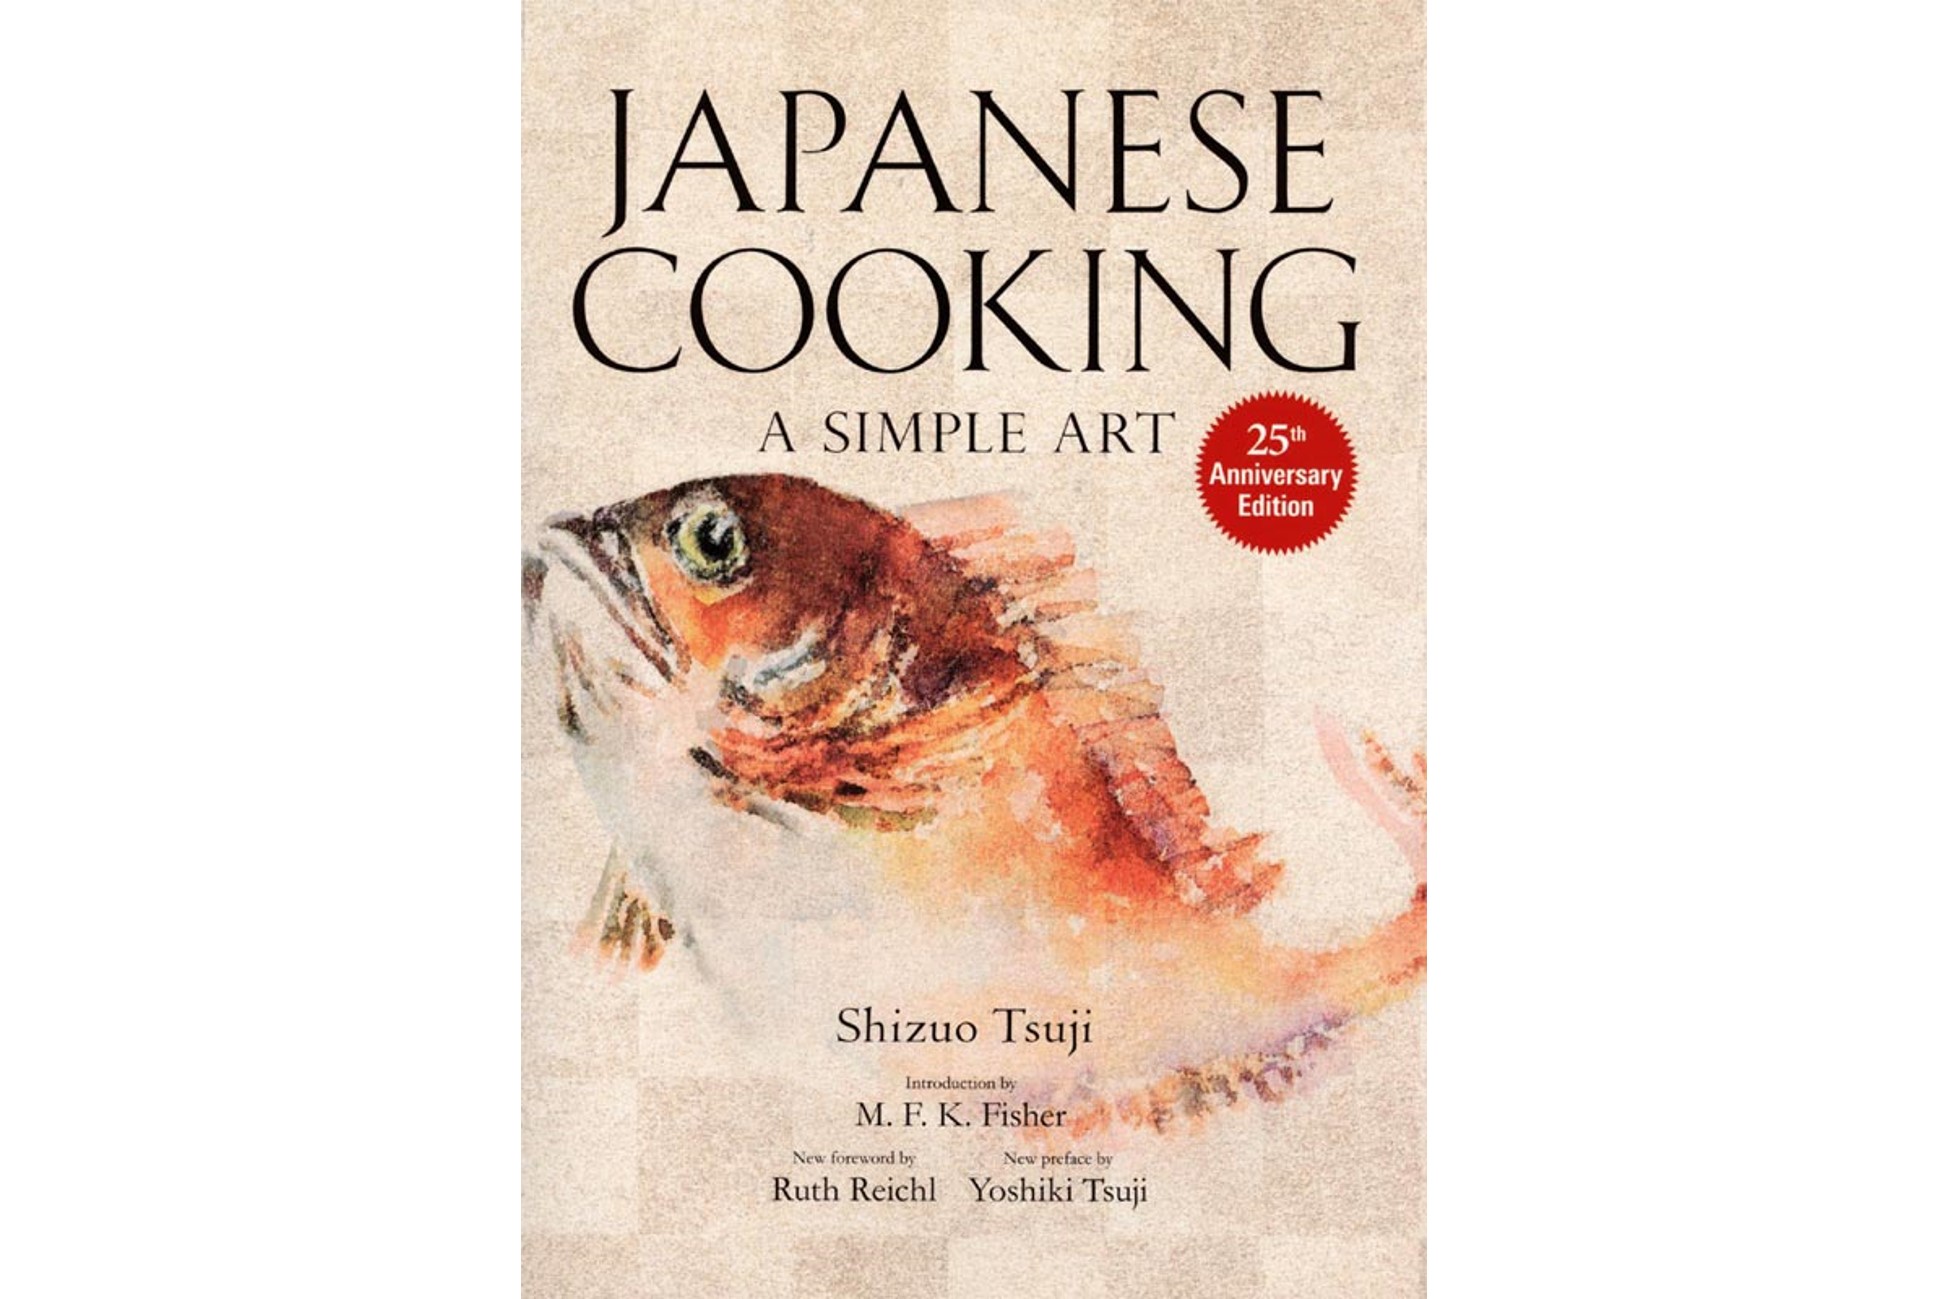 Japanese Cooking：A Simple Art（25th Anniversary Edition）英文版 辻静雄の日本料理 [新装版]